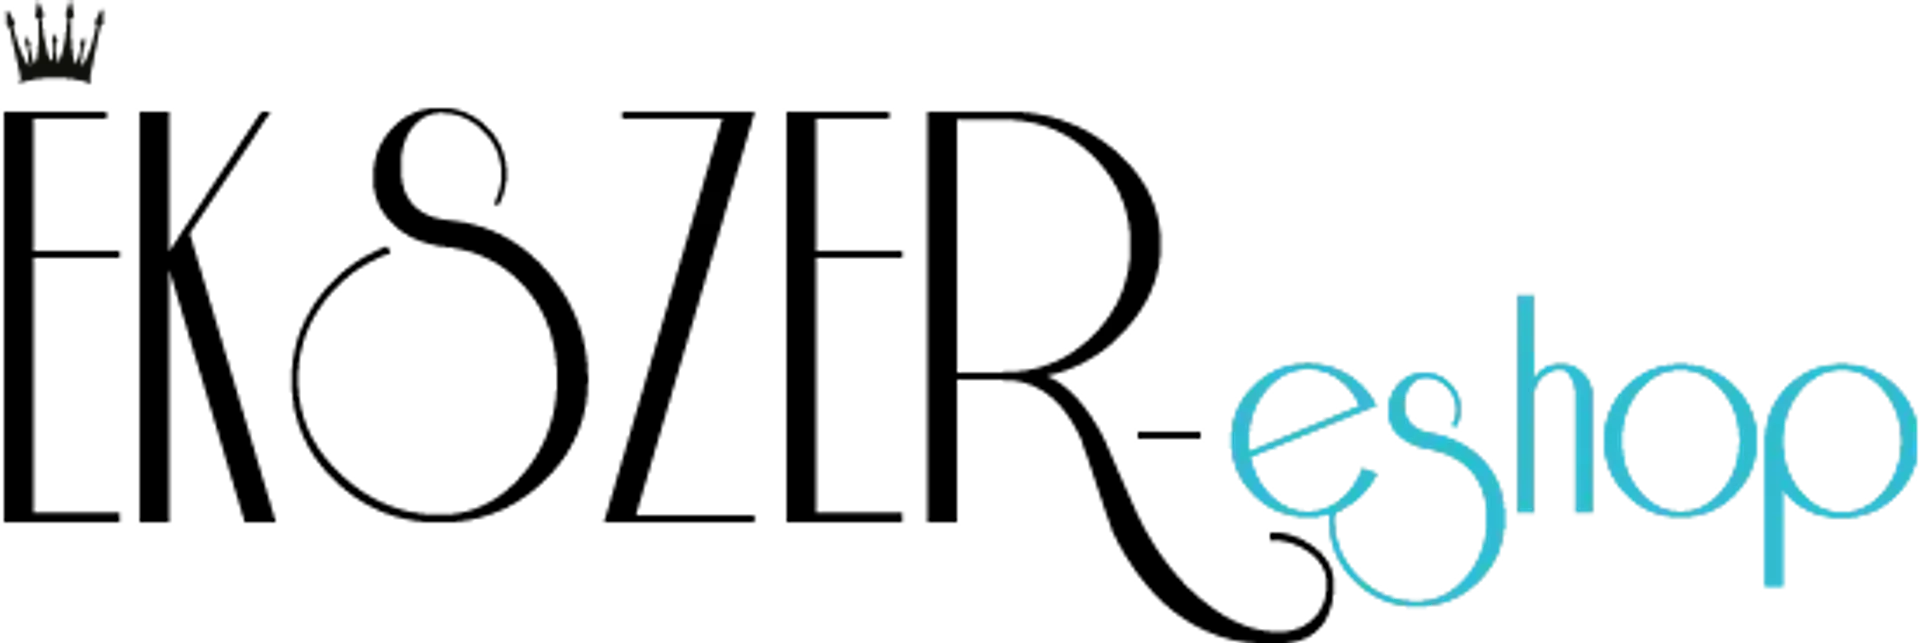 EKSZER ESHOP logo